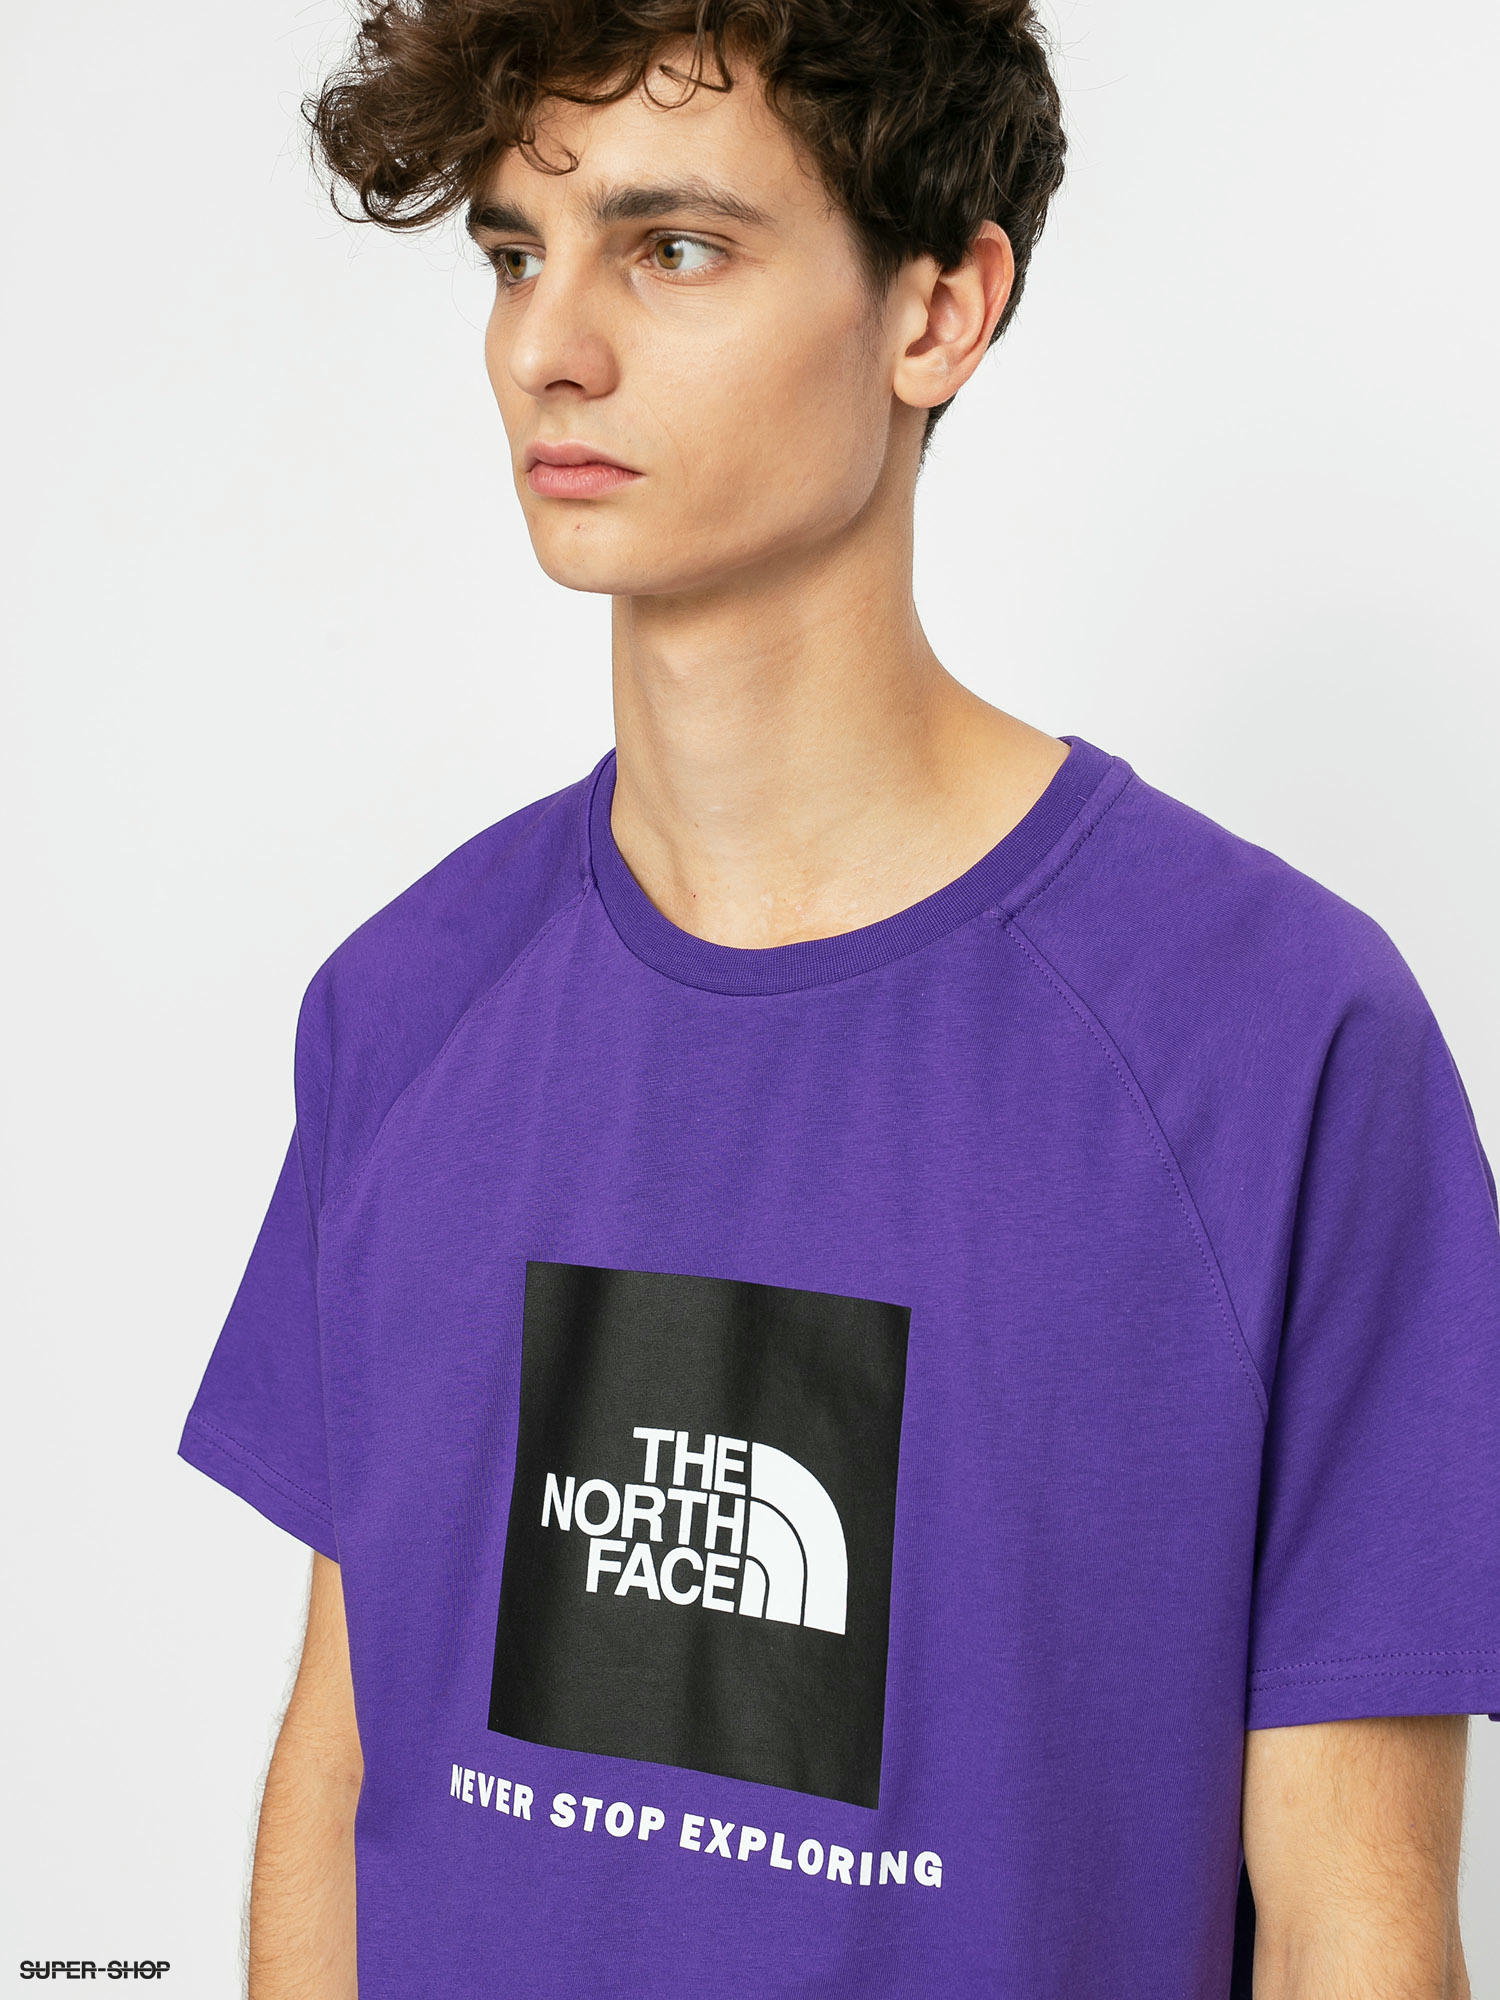 north face raglan t shirt